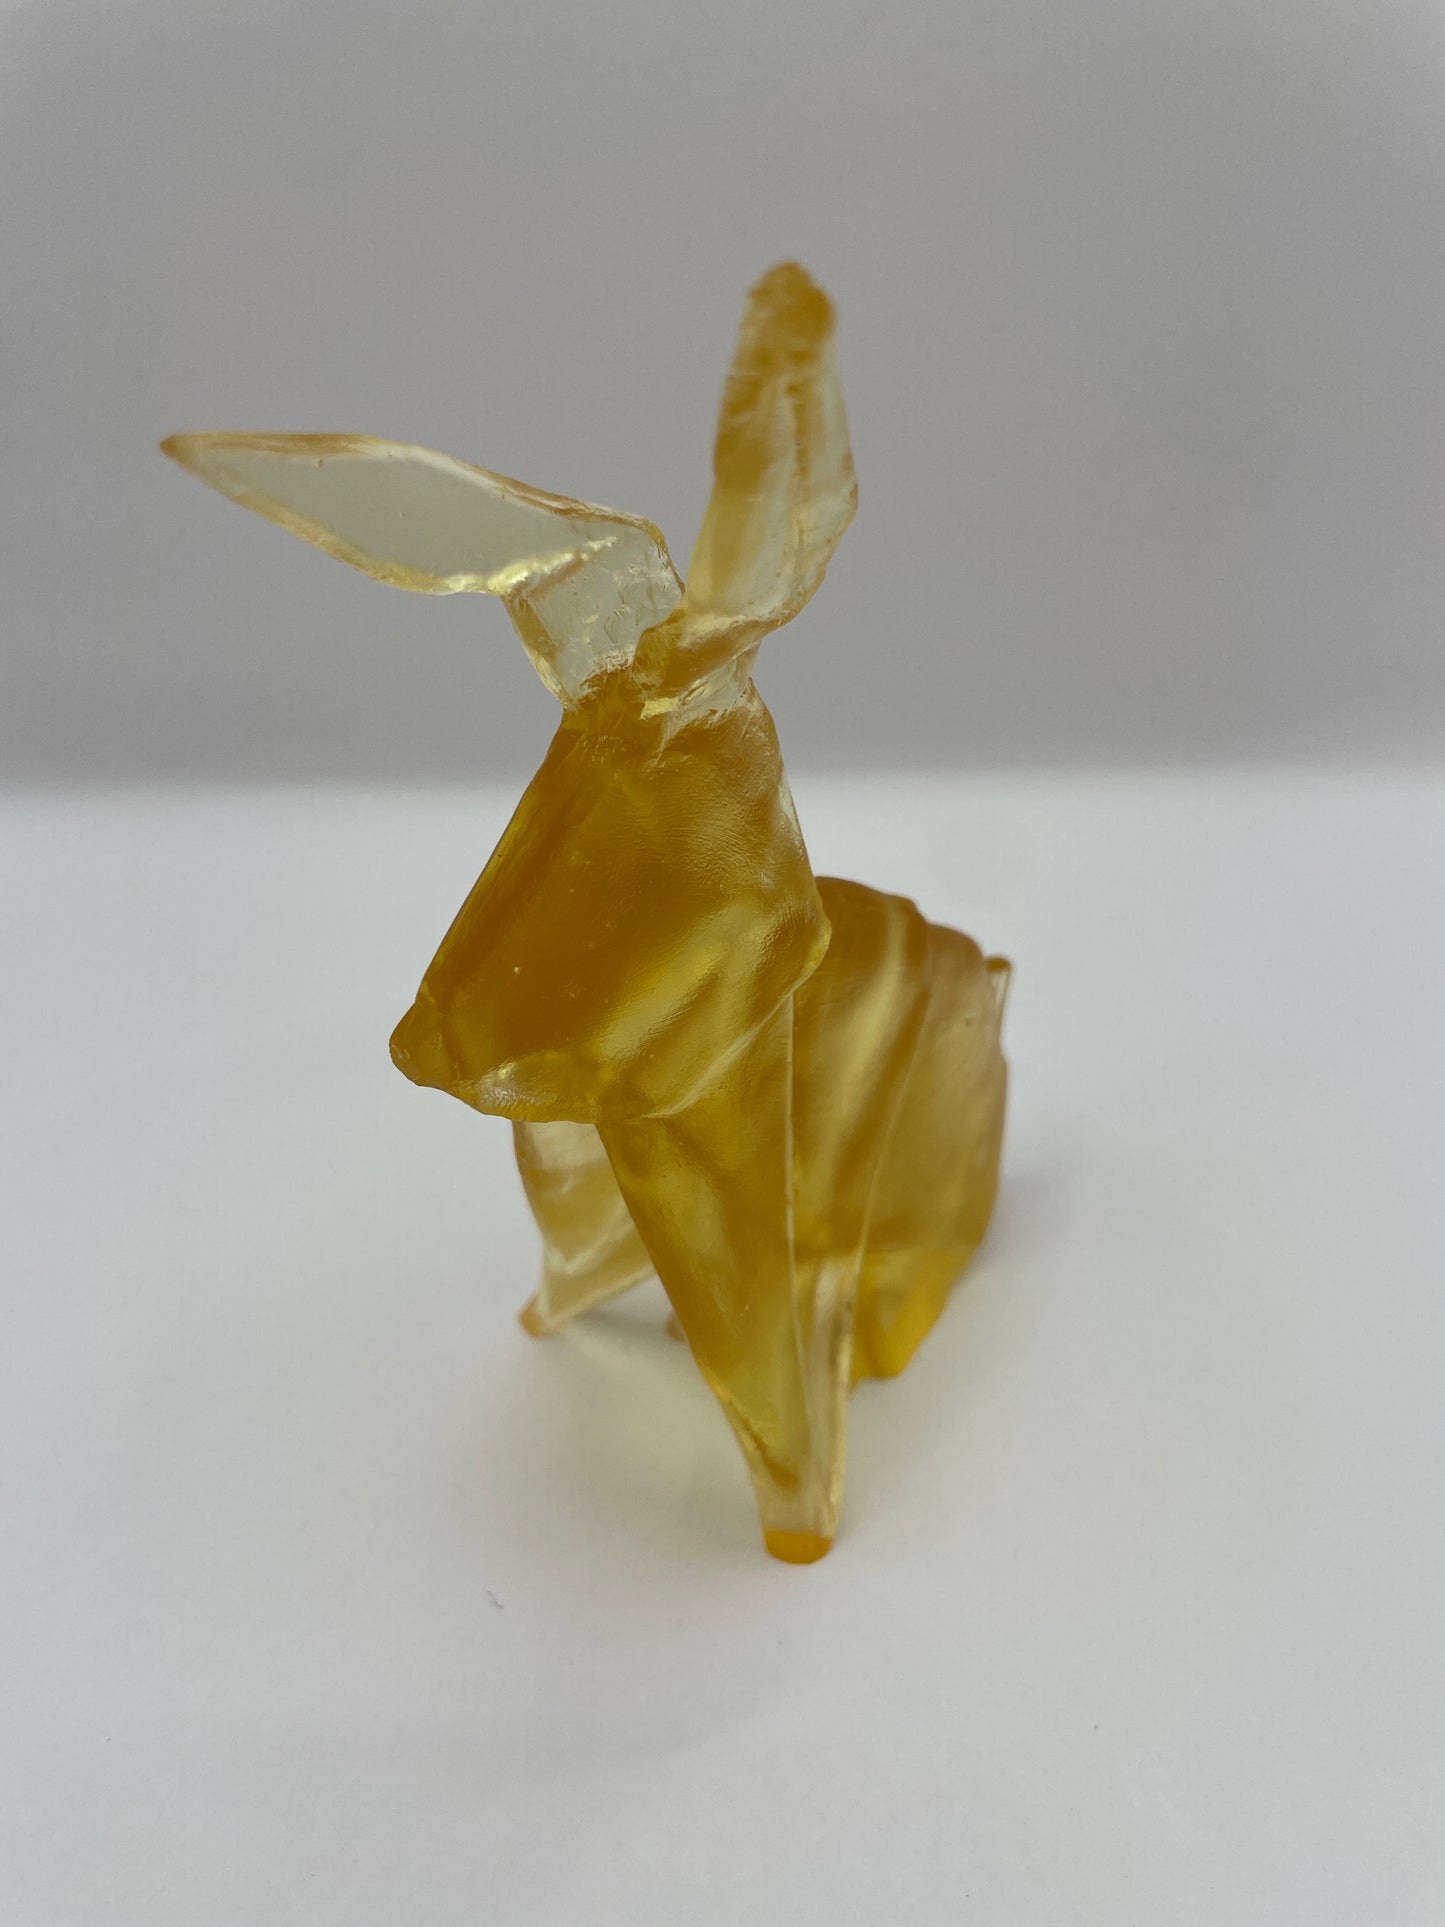 Rabbit origami glass Thomas Barter